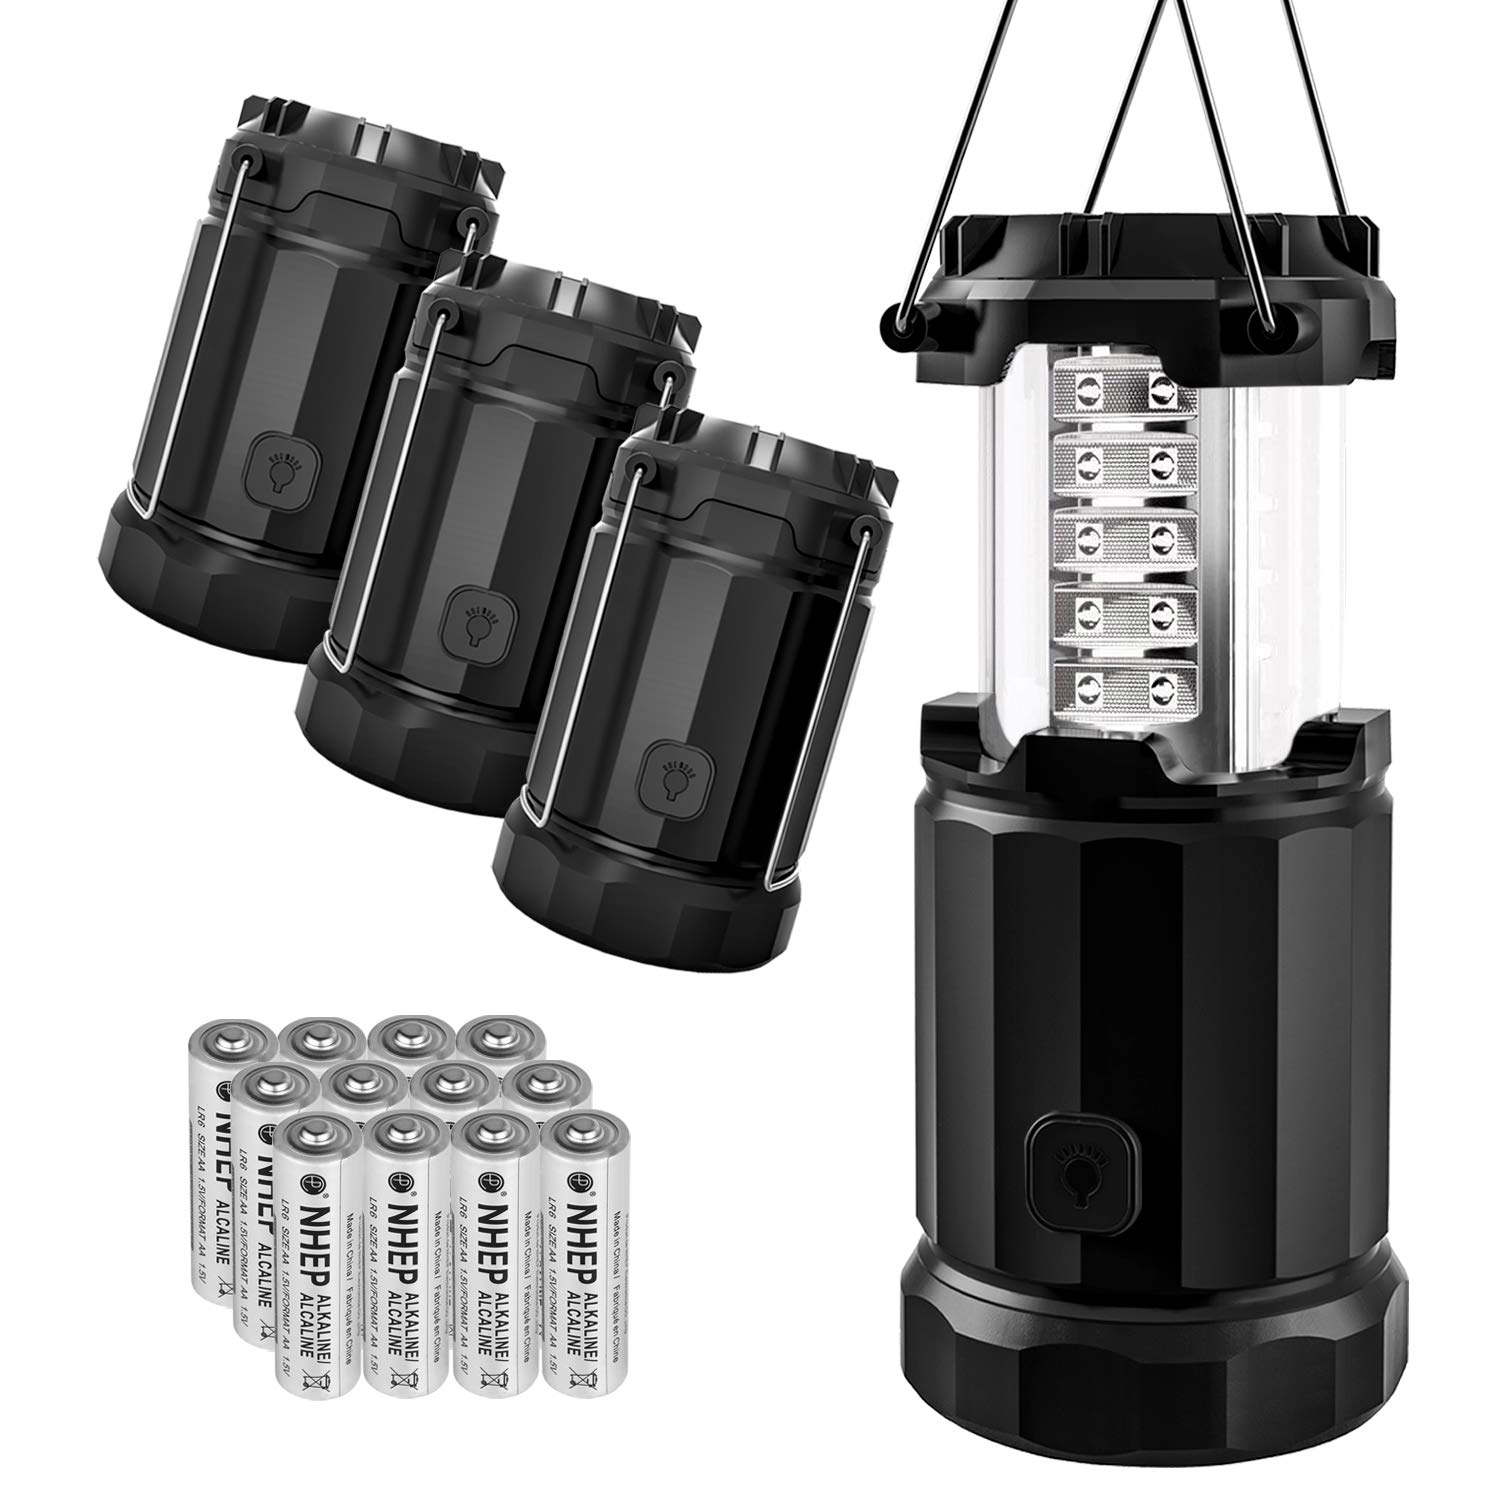 https://www.dontwasteyourmoney.com/wp-content/uploads/2019/08/etekcity-4-pack-portable-led-camping-lantern-camping-lantern.jpg